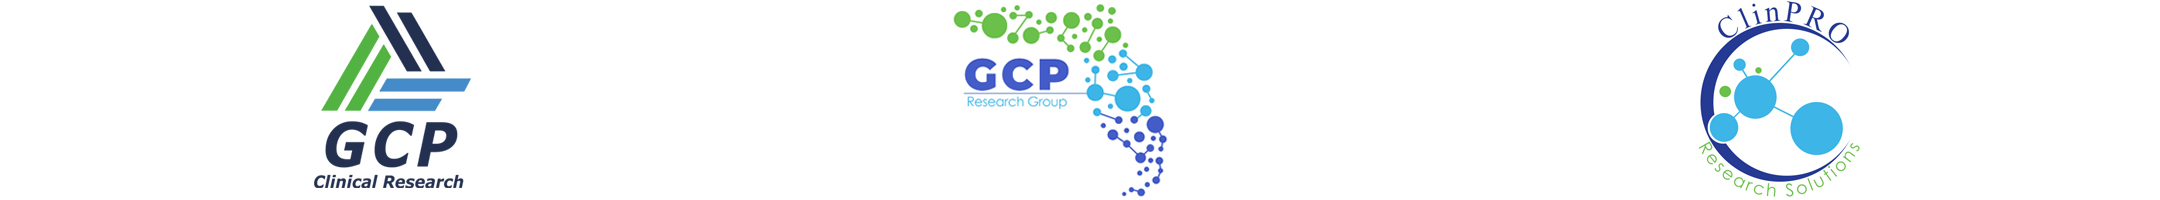 GCP Research Group Logo